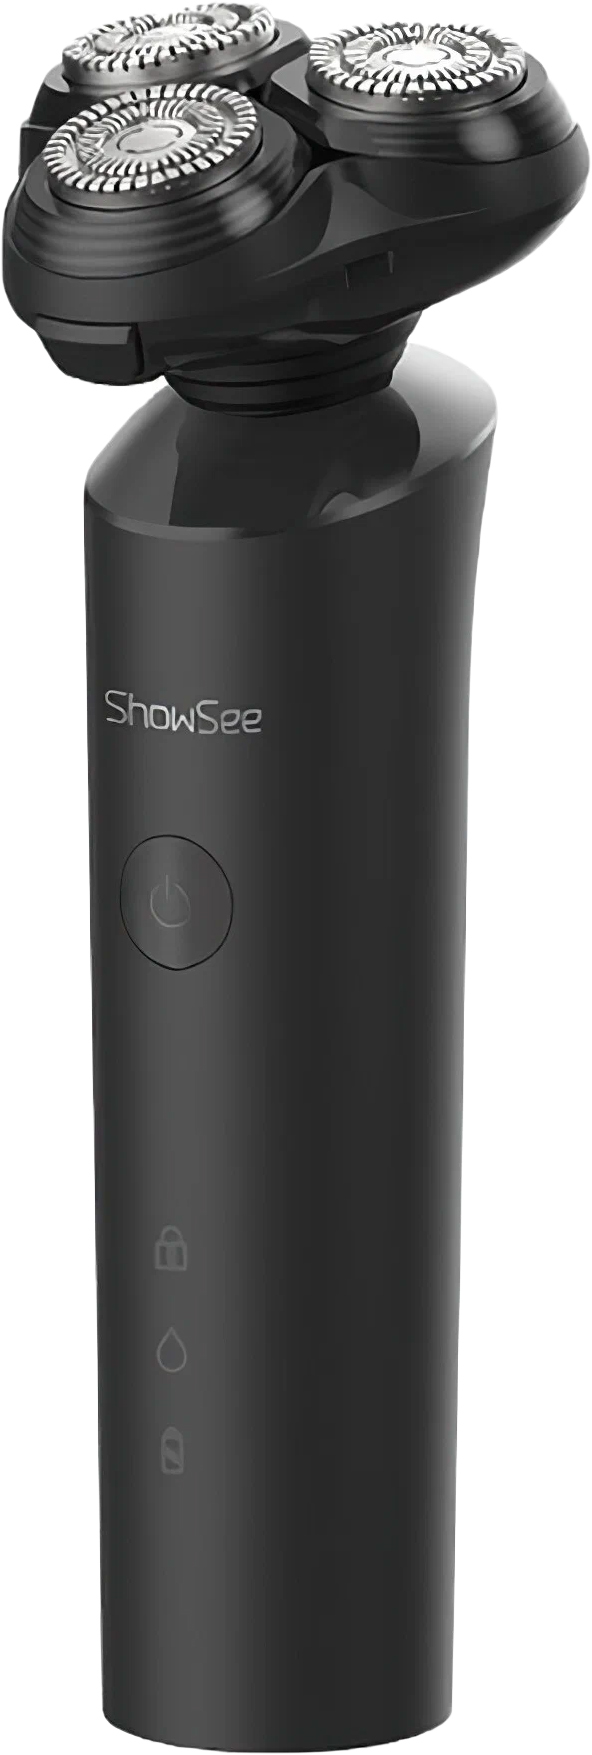 Электробритва Xiaomi ShowSee Electric Shaver F1-R электробритва showsee f302 bk